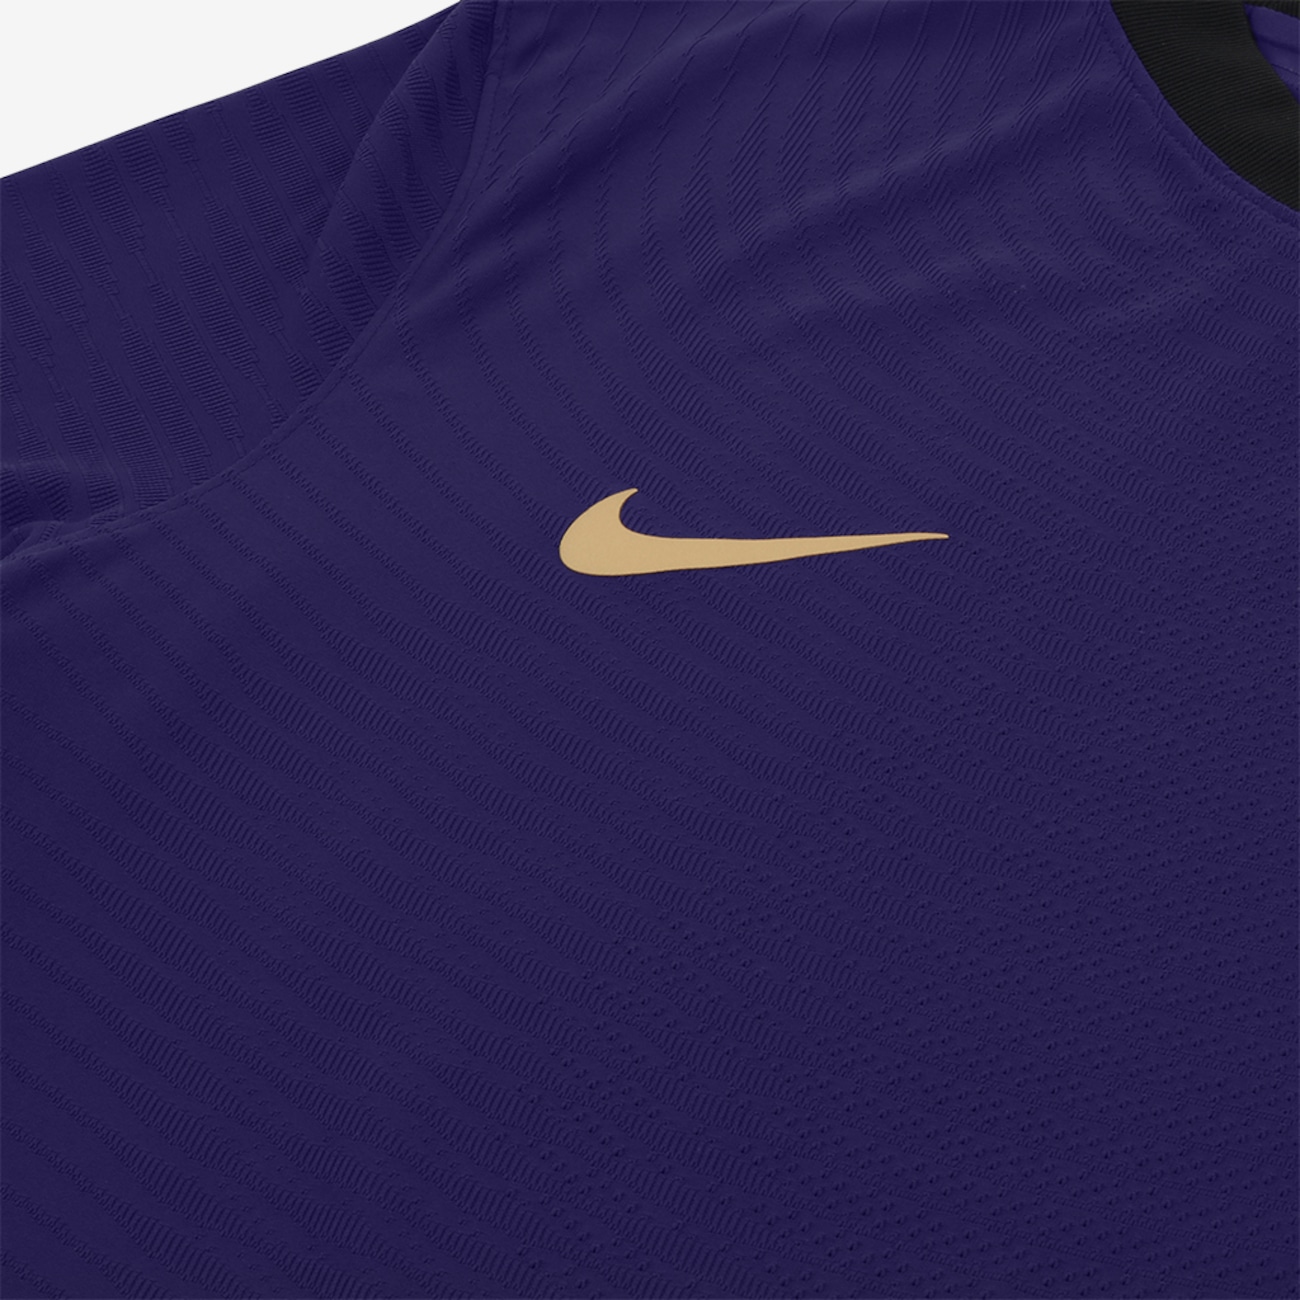 Camisa Nike Corinthians III 2021/22 Jogador Masculina - Foto 4